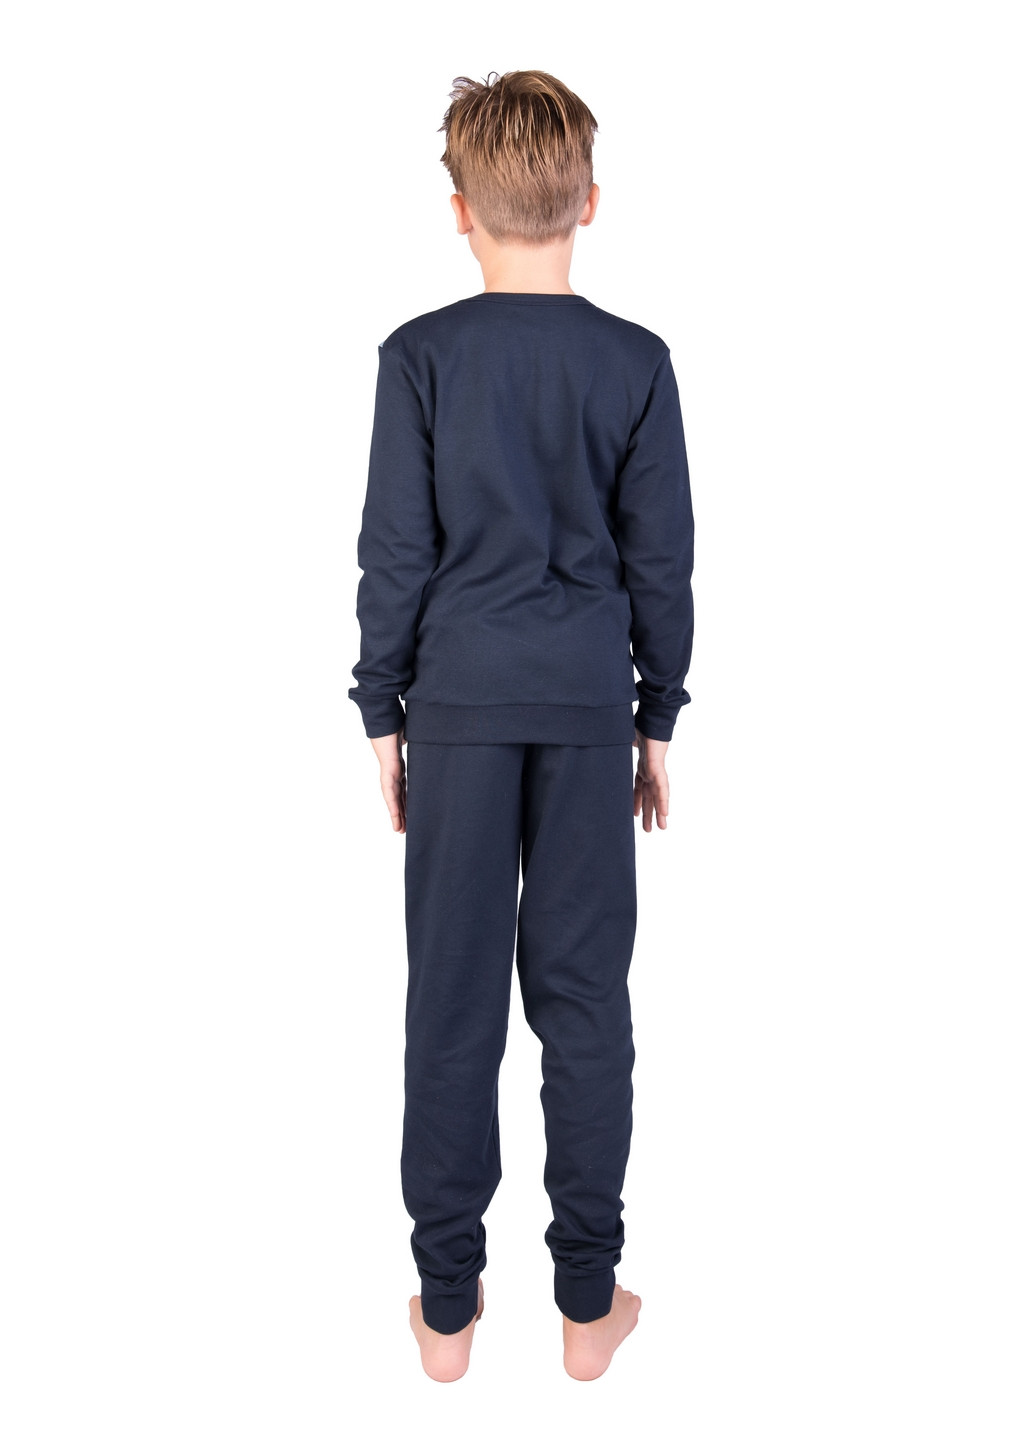 Темно-синяя всесезон пижама детская Наталюкс 94-3605